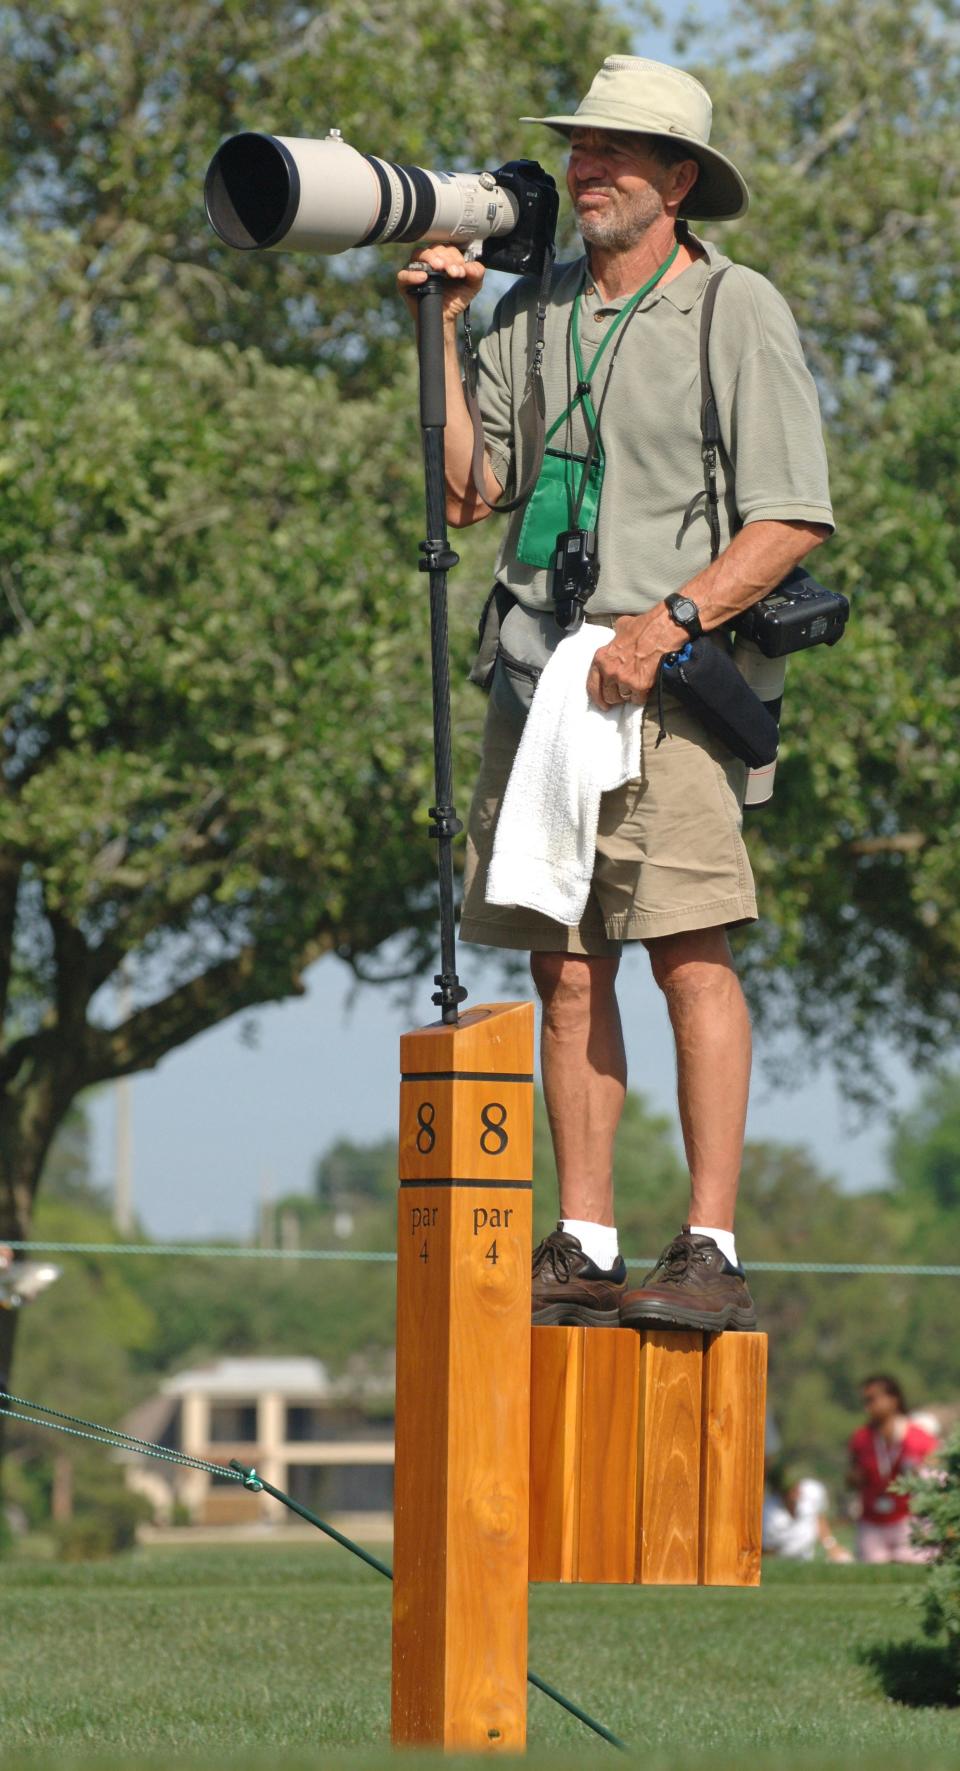 Golf photographer Steve Szurlej working at a golf tournament.